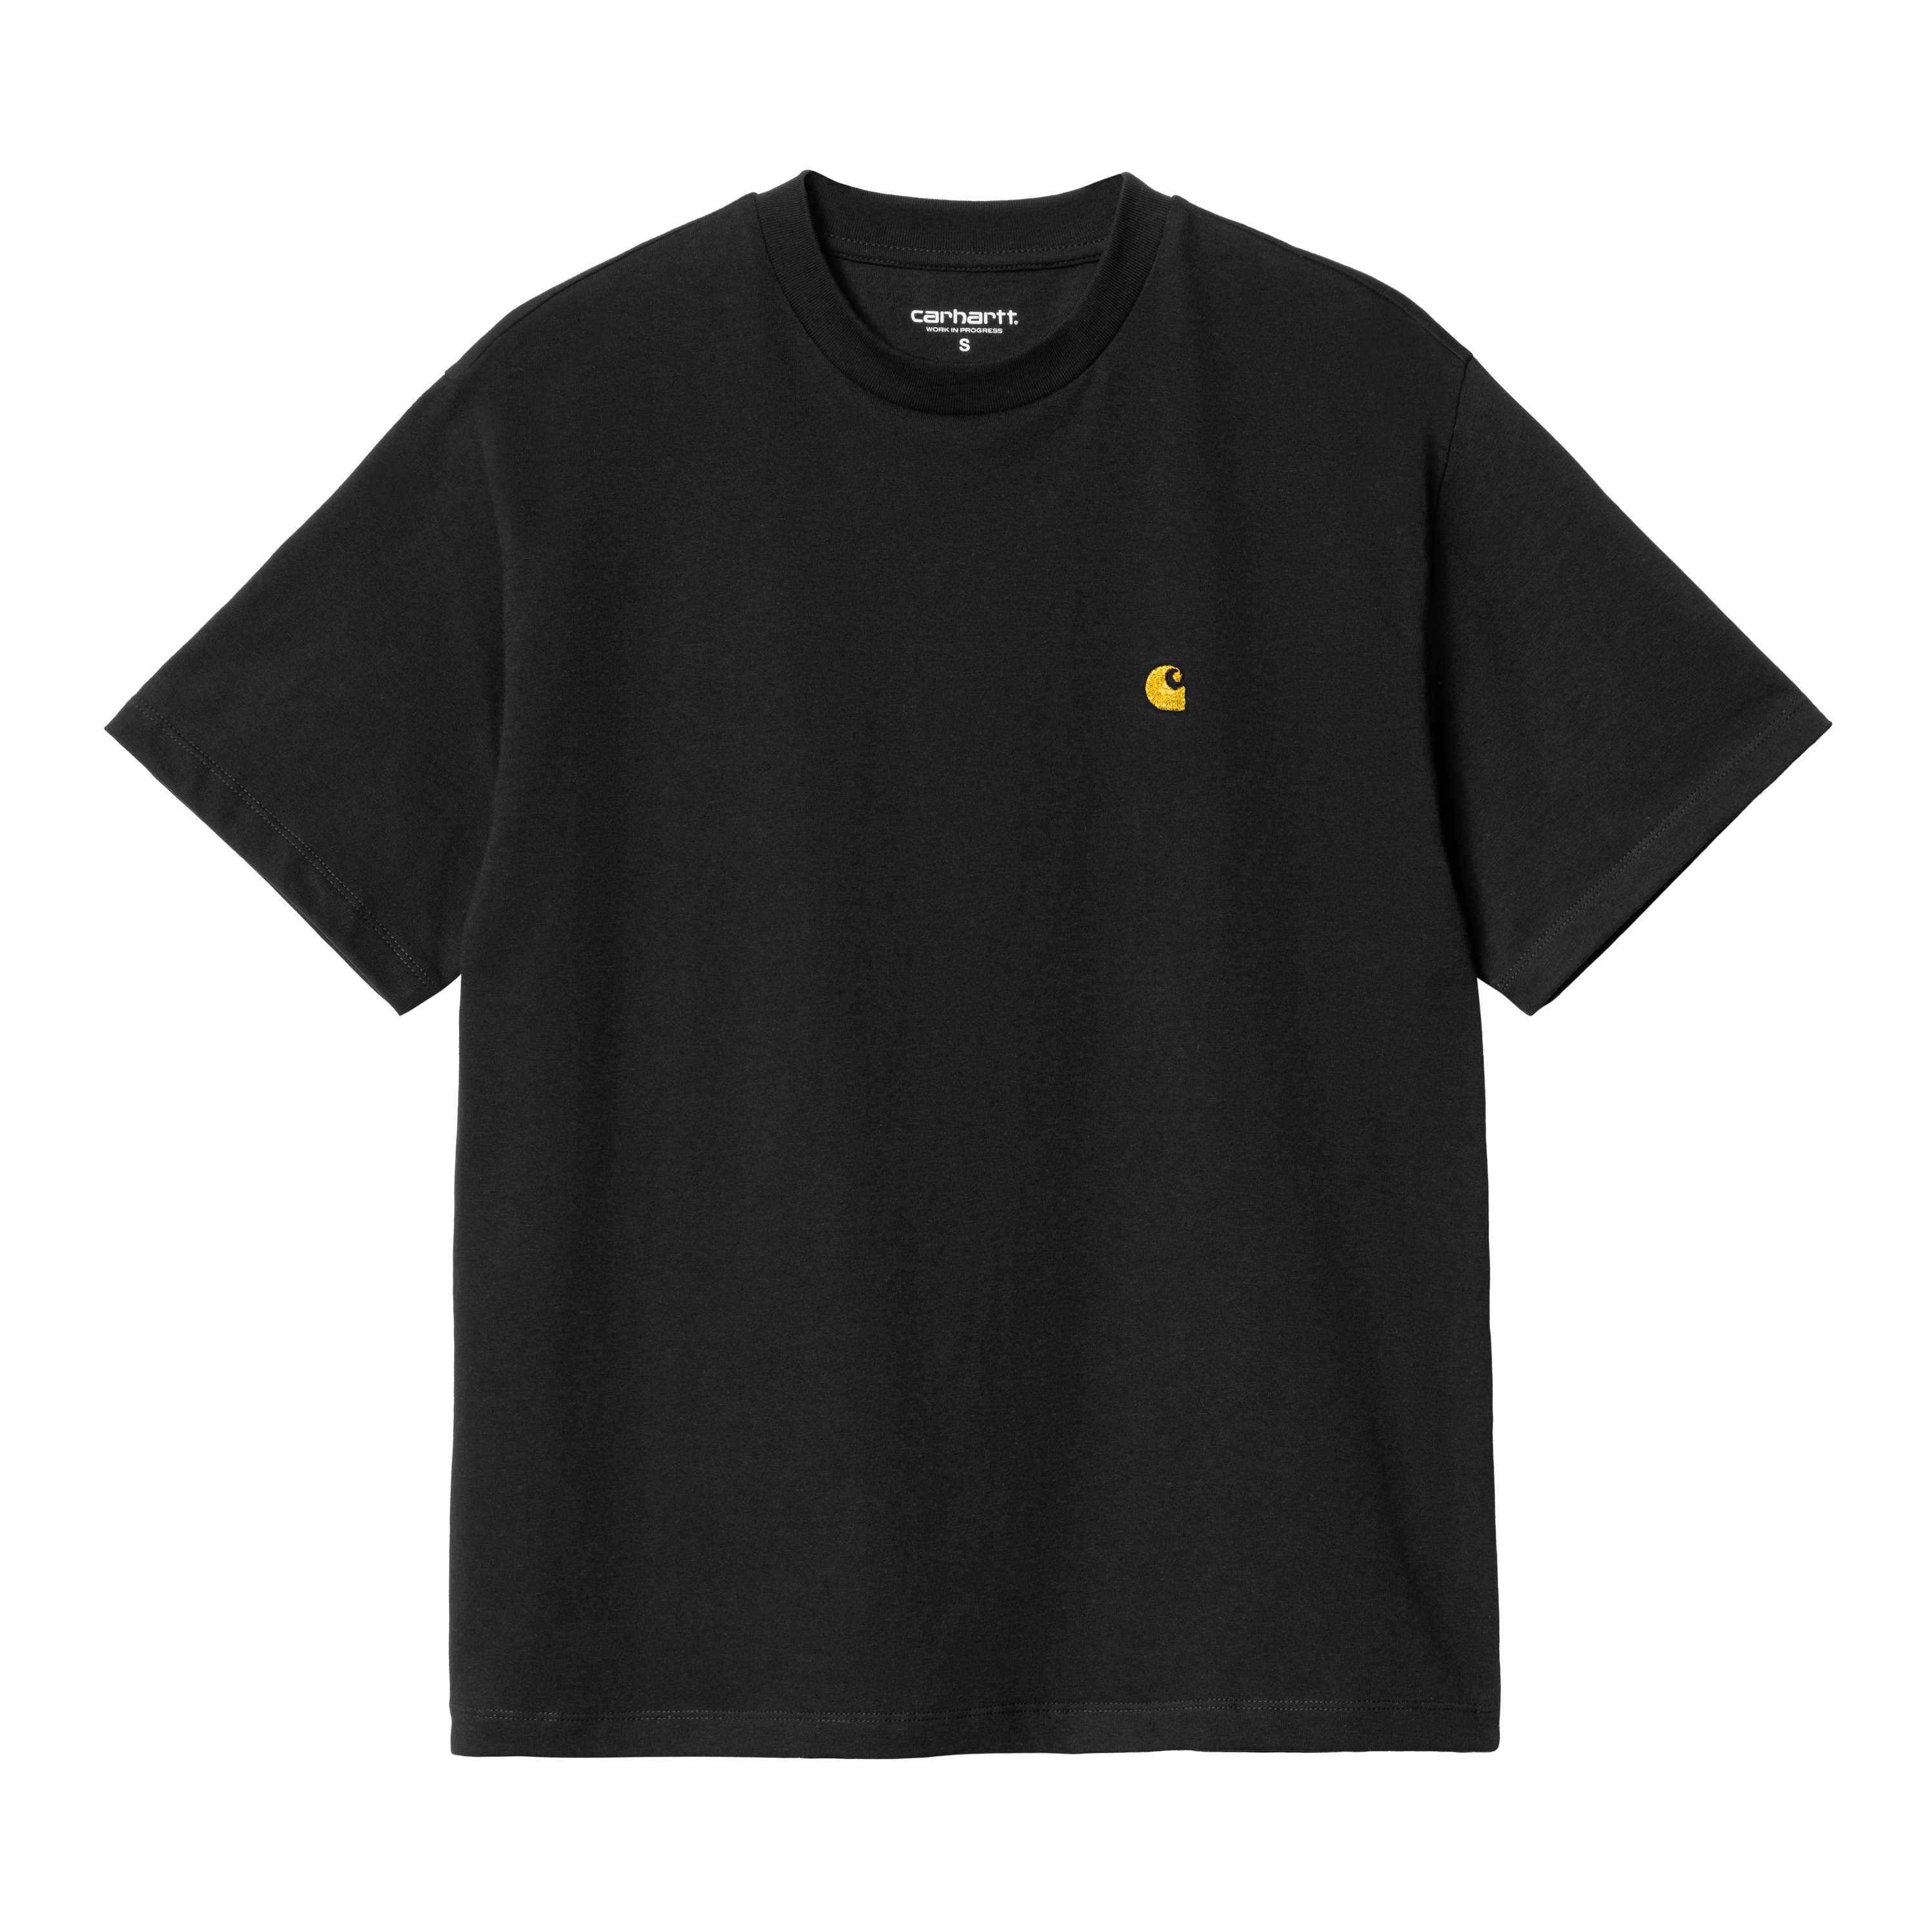 Carhartt WIP Women’s Short Sleeve Chase T-Shirt in Black